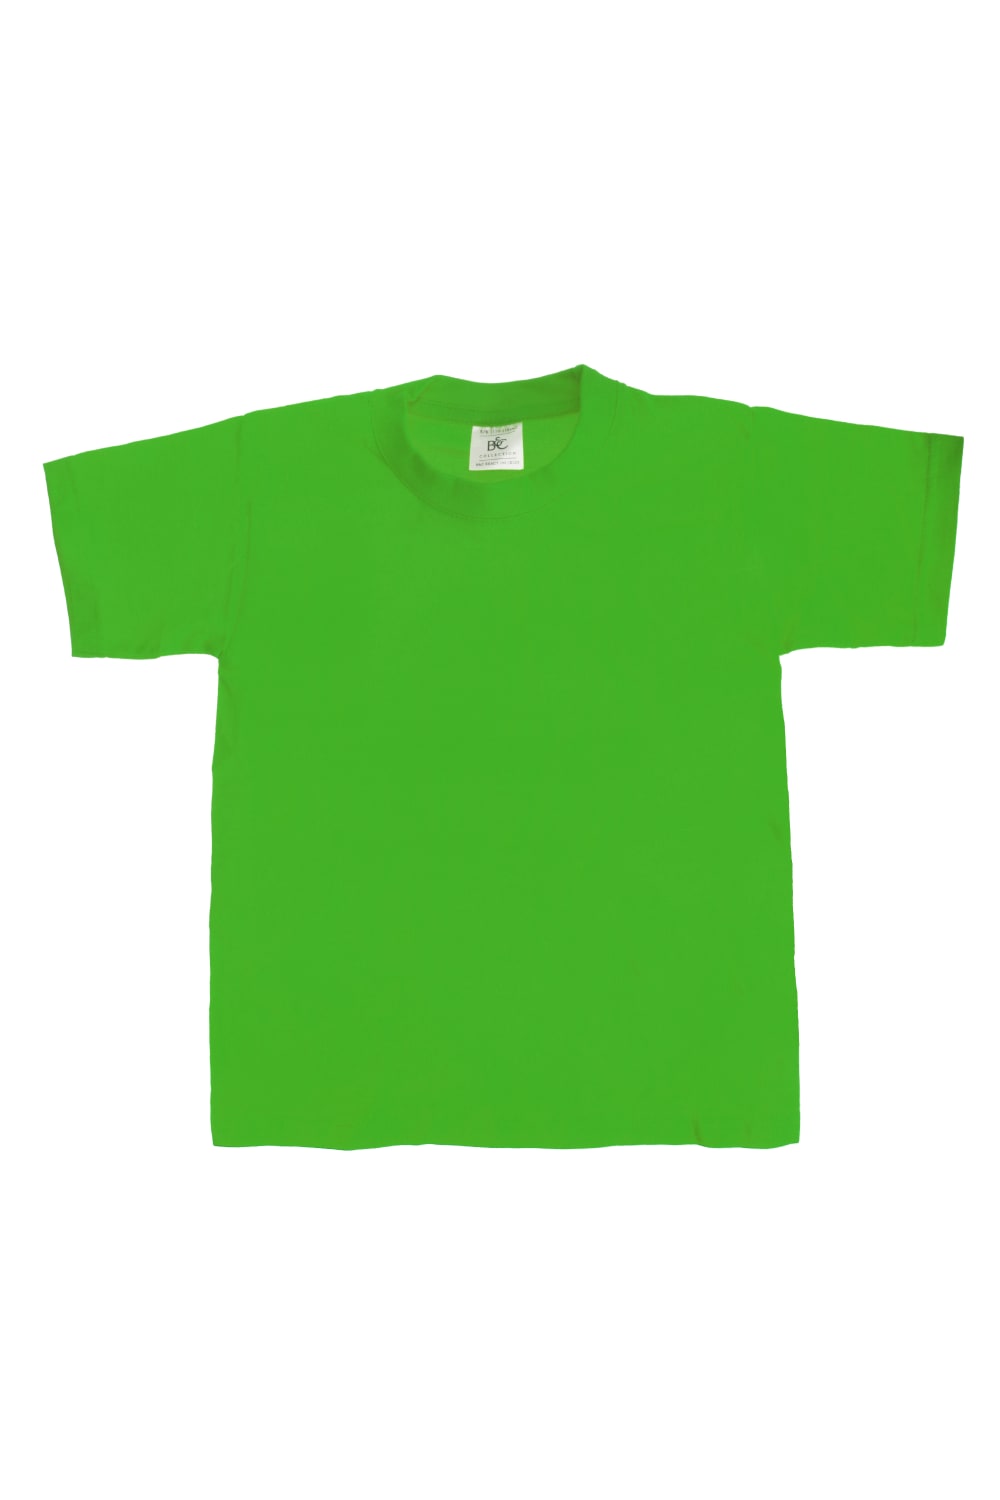 Big Boys Kids/Childrens Exact 190 Short Sleeved T-Shirt (Pack Of 2) - Kelly Green